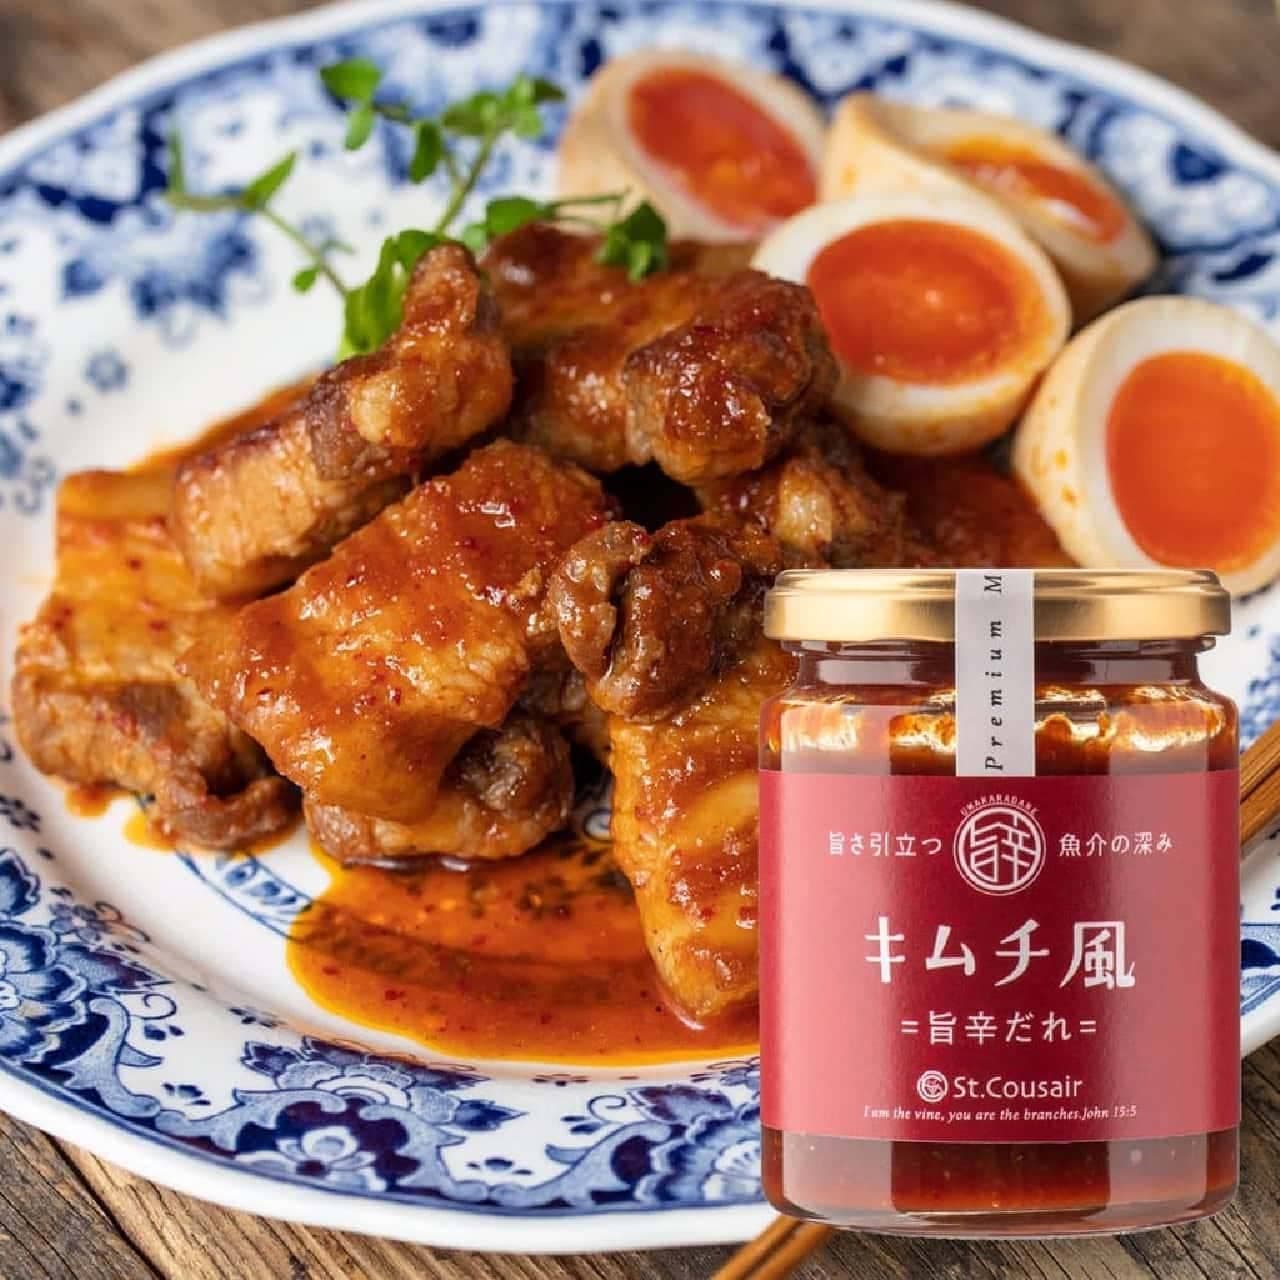 Sankuzeru "Kimchi style-Spicy sauce-"